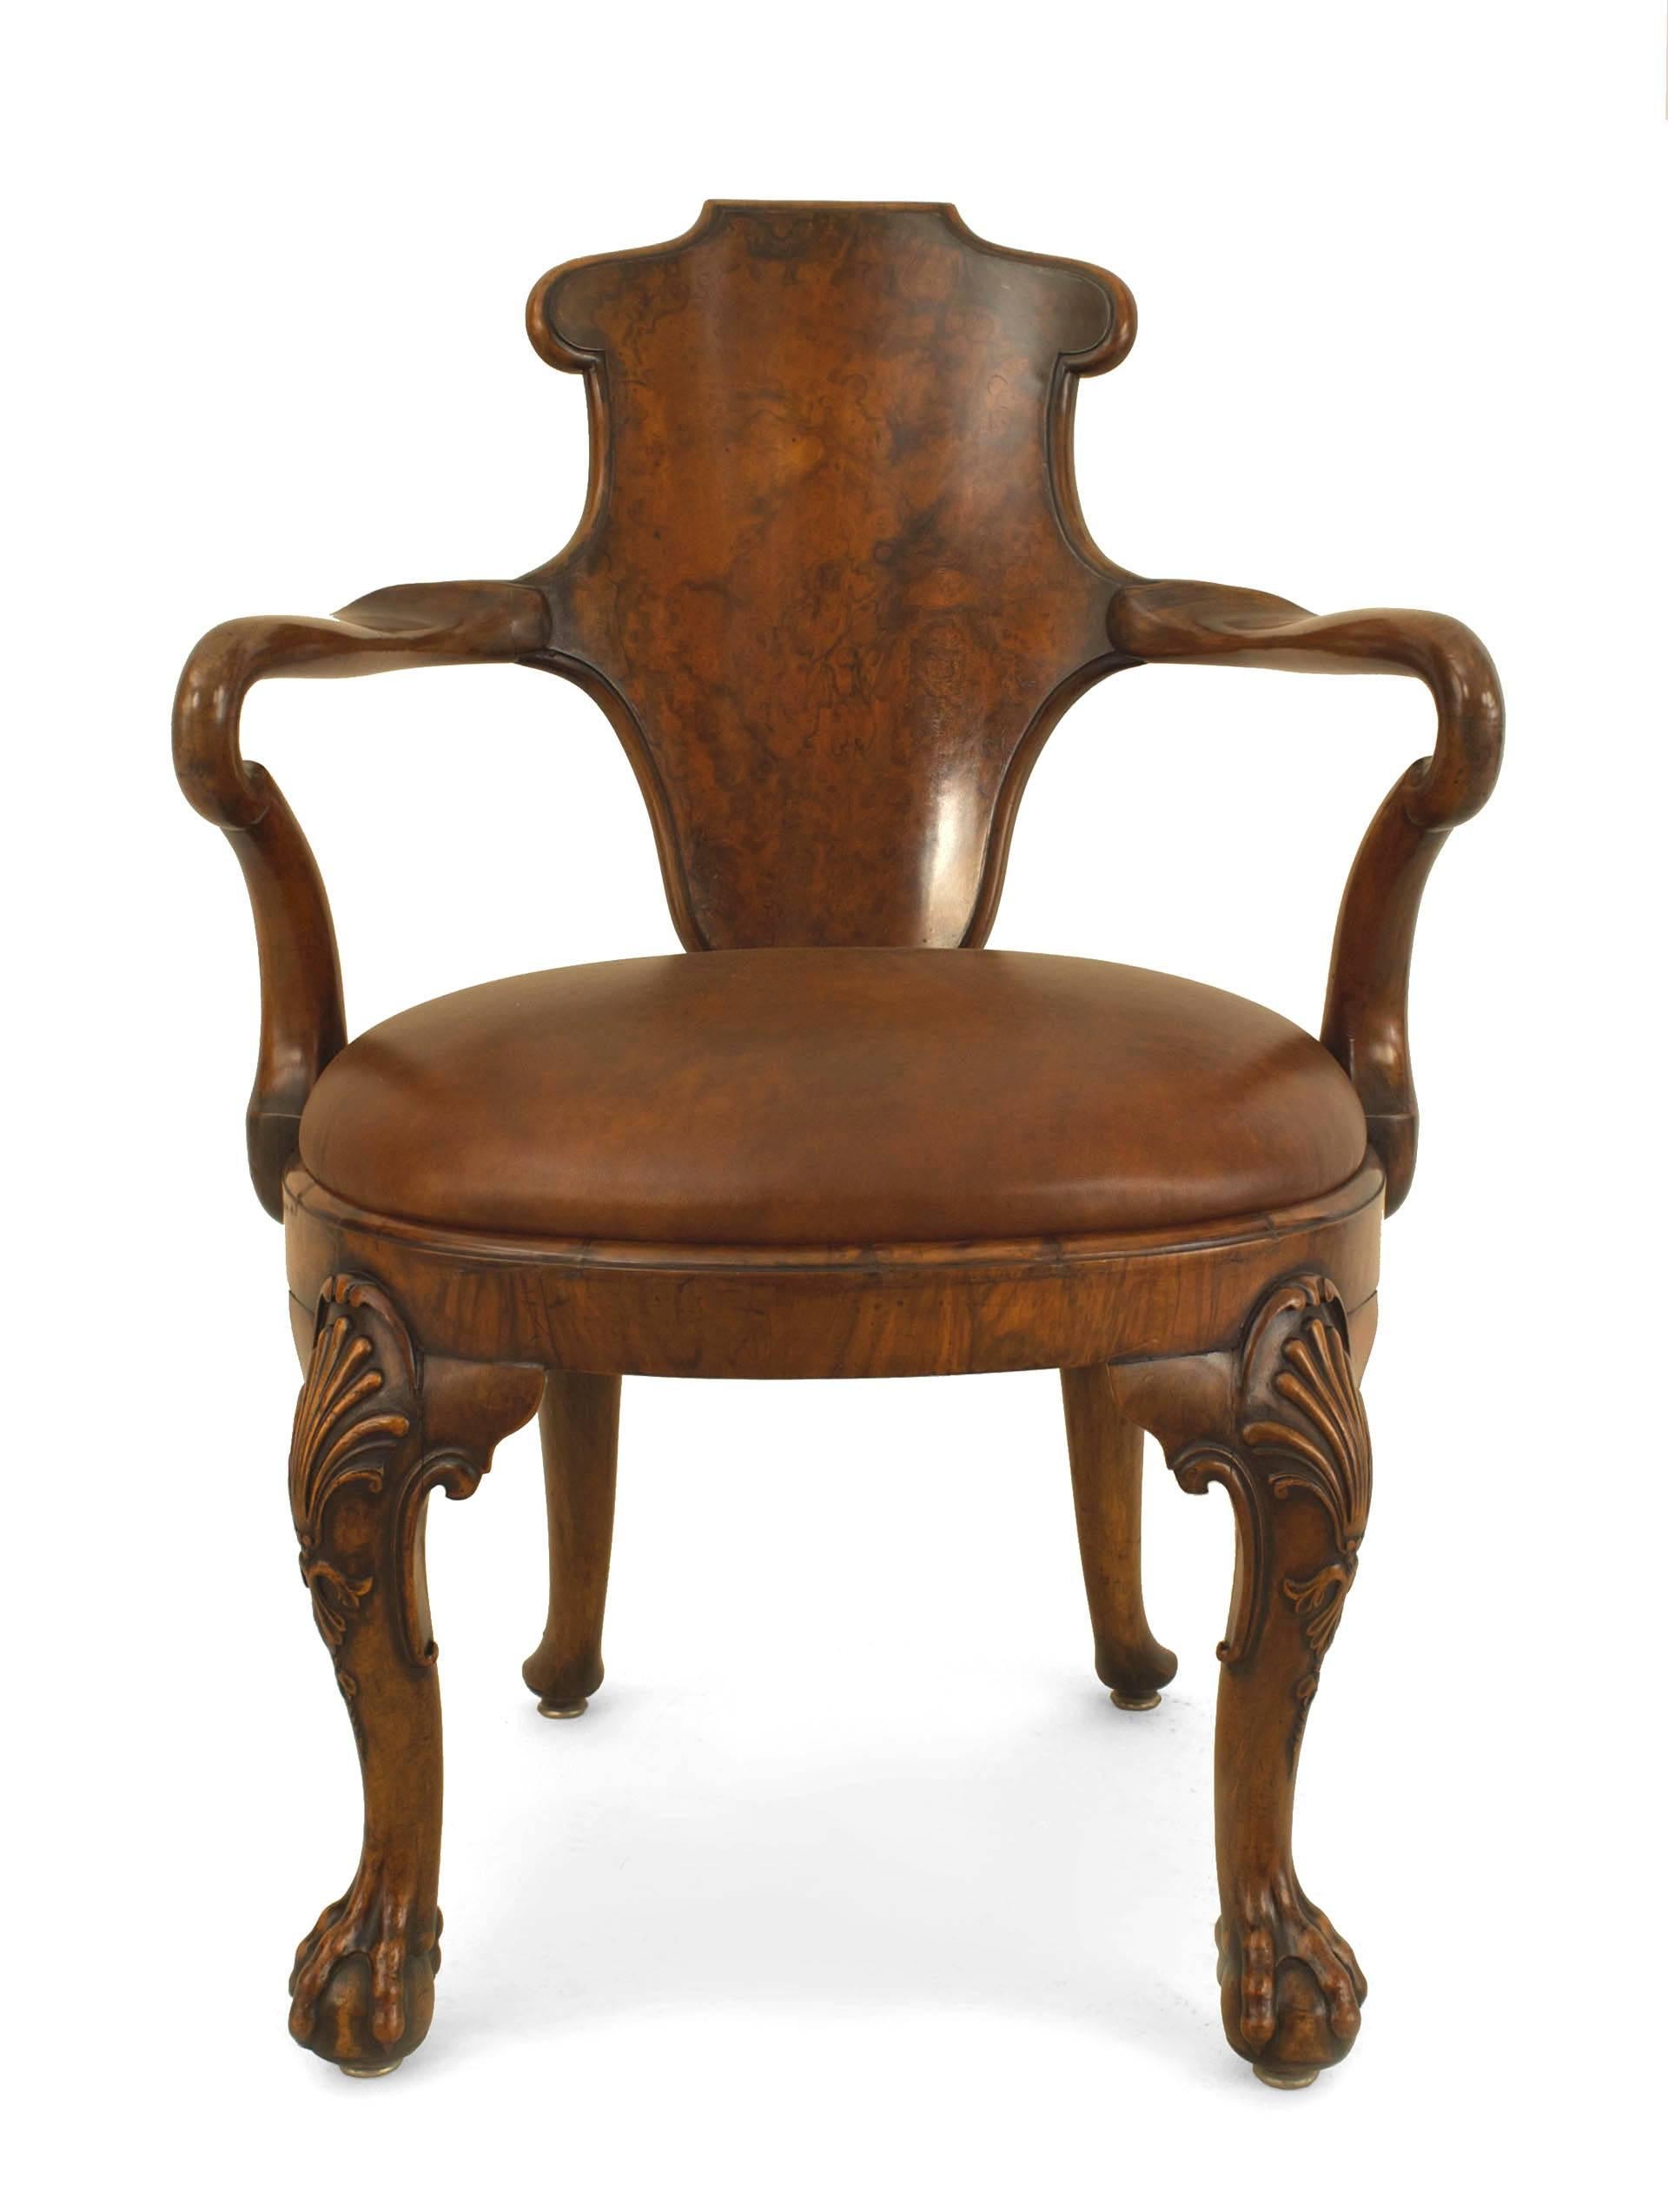 English Georgian (18th century) walnut spoon back open armchair with a burl oval back.